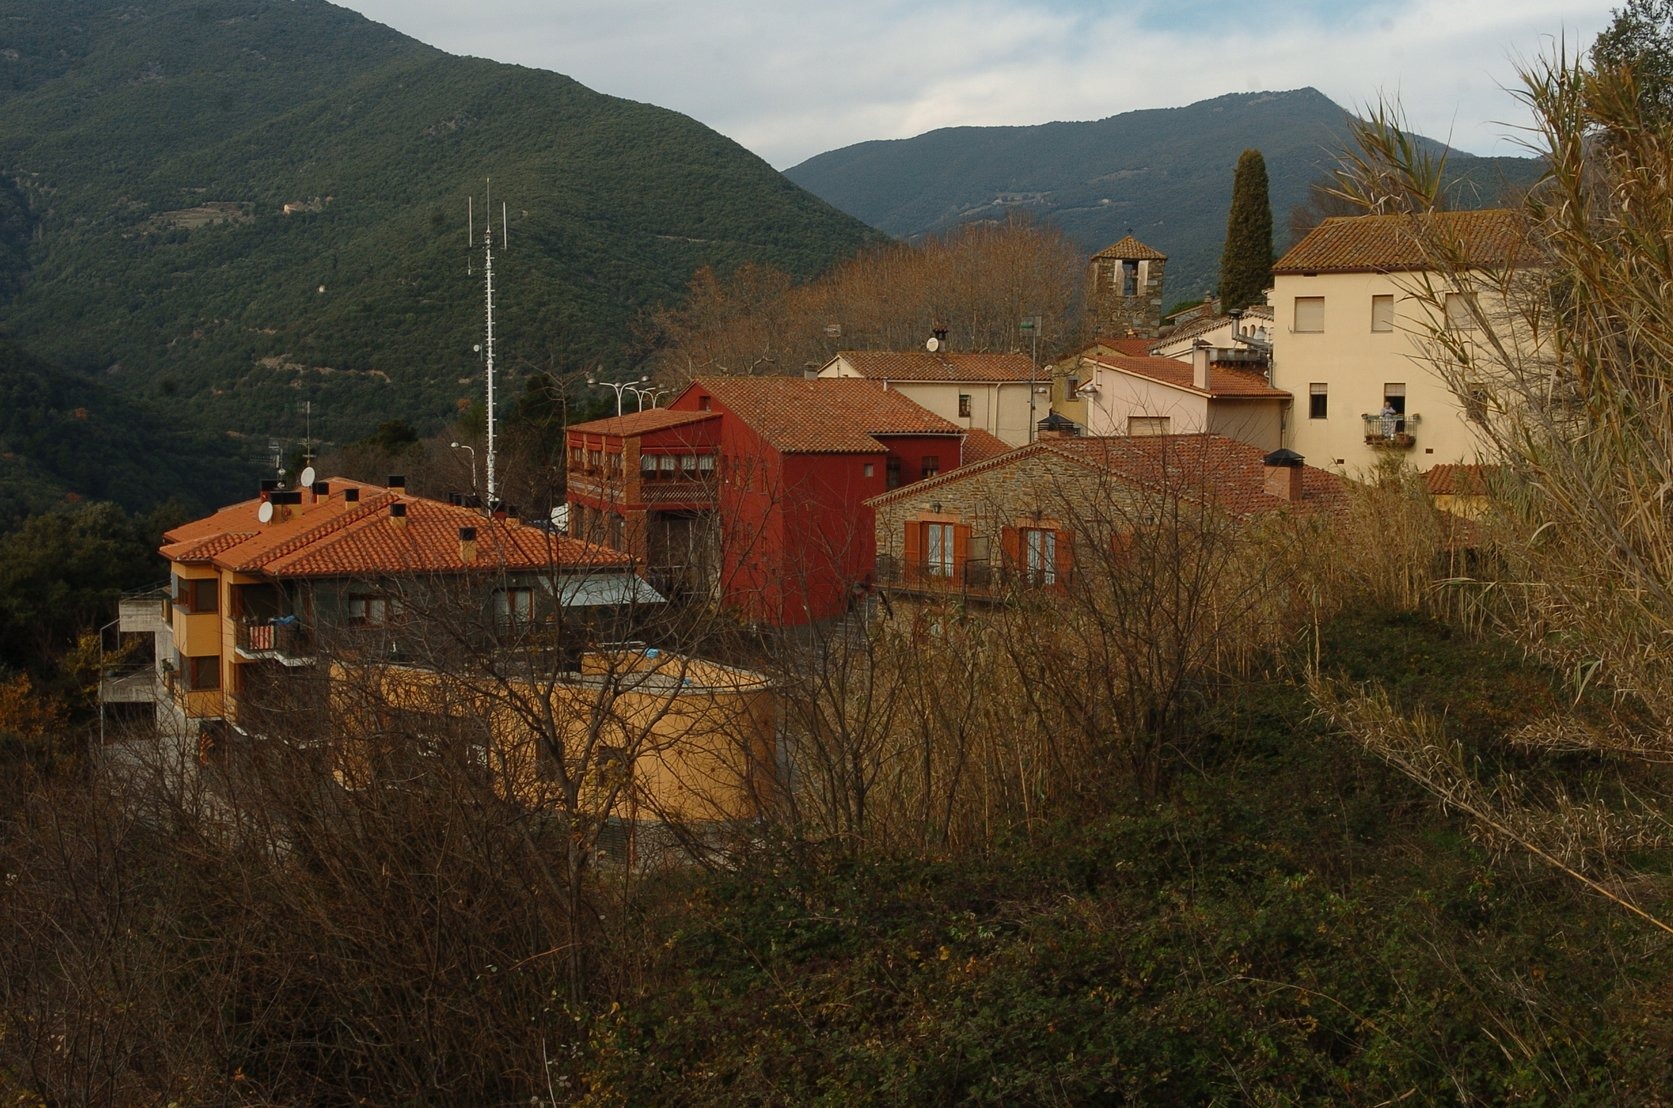 El poble de Montseny en una imatge d'arxiu